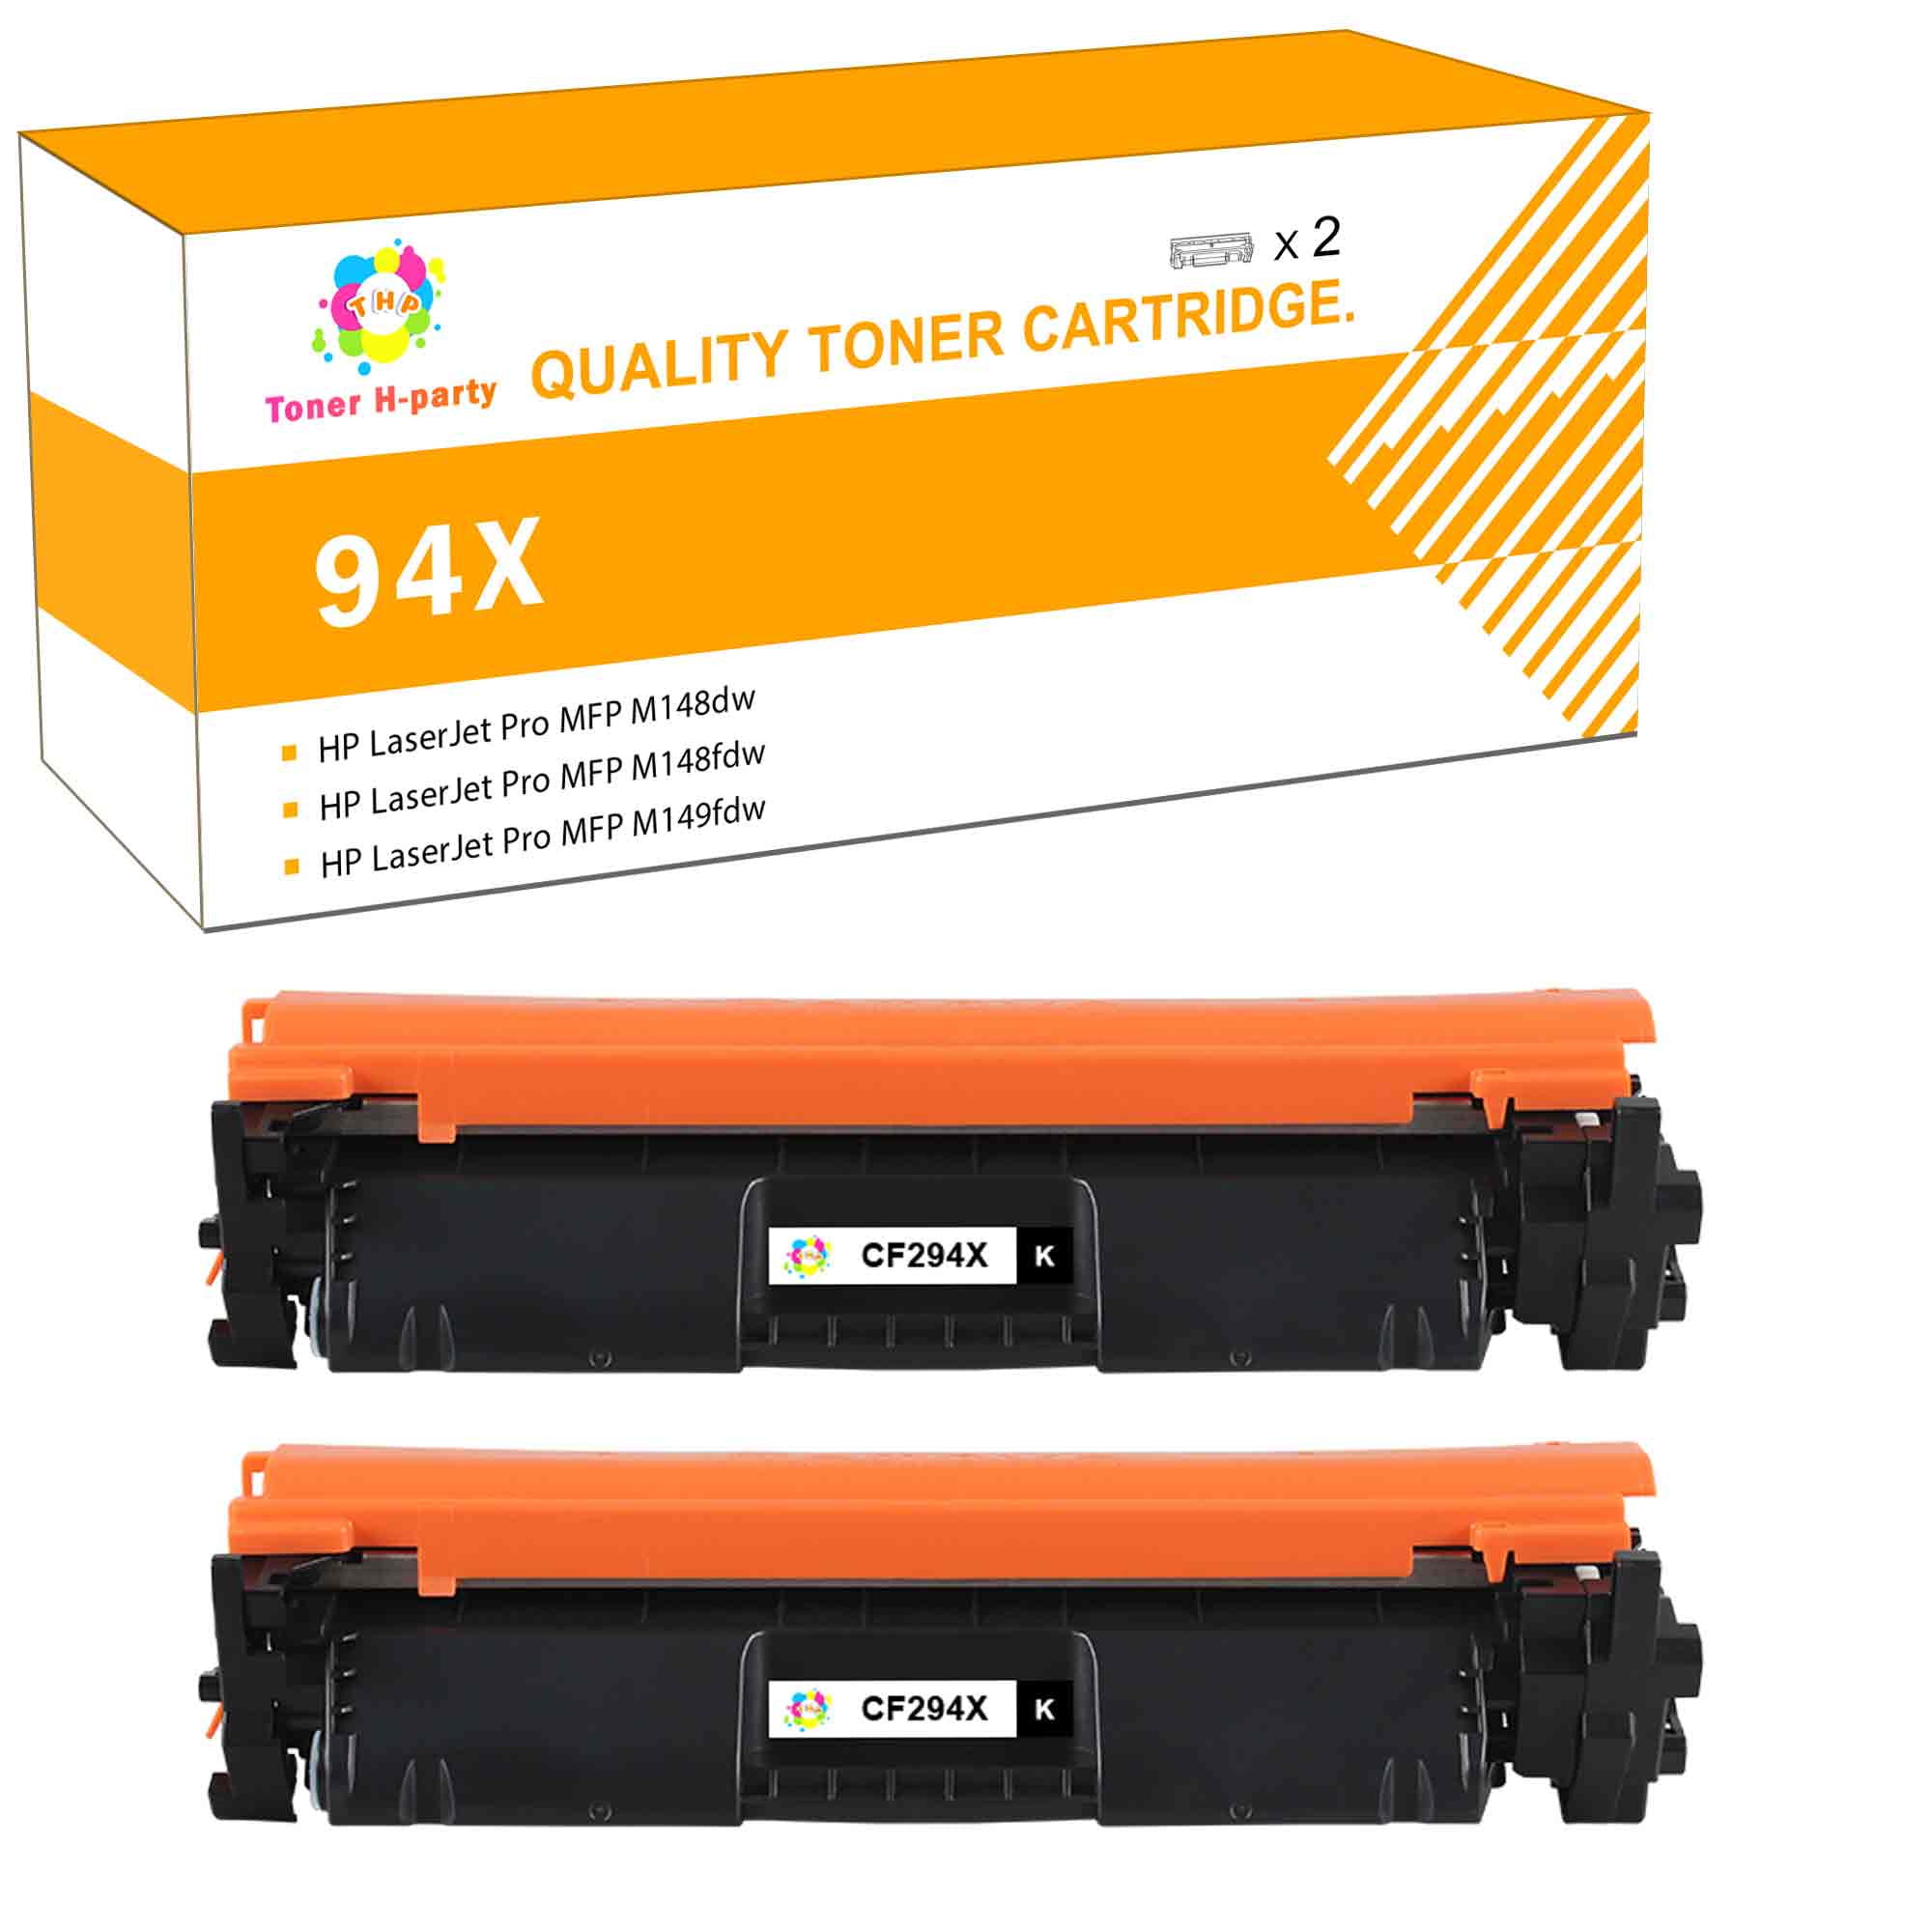 Toner H-Party Compatible Toner Cartridge for HP 94X CF294X LaserJet Pro MFP  M148dw, MFP M148fdw Printer Ink (Black, 2 Pack)